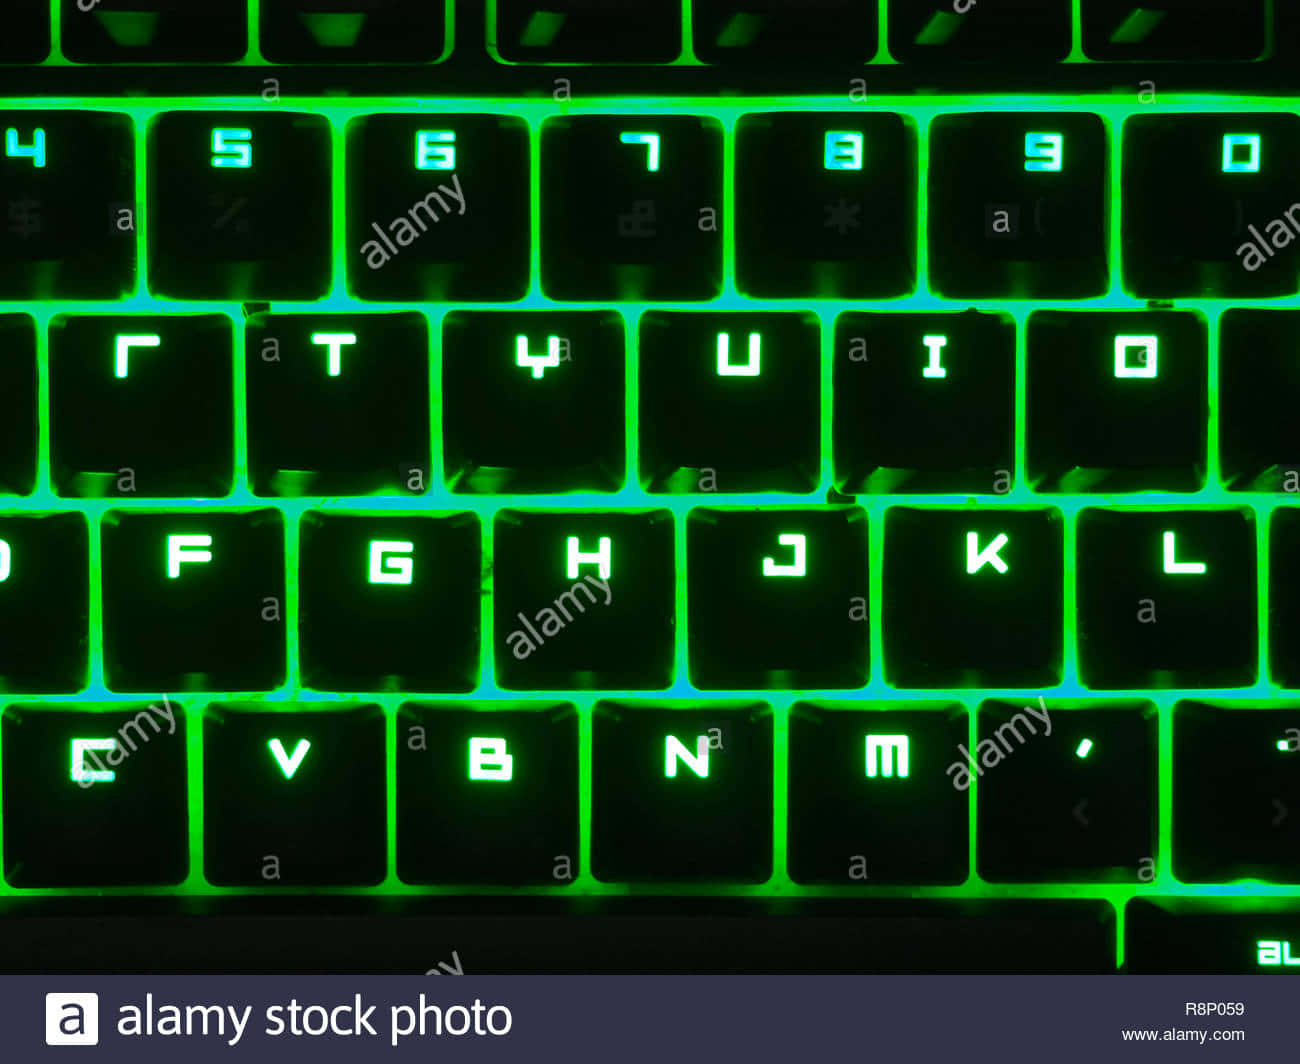 Engrønlysende Tastatur På En Computer. Wallpaper